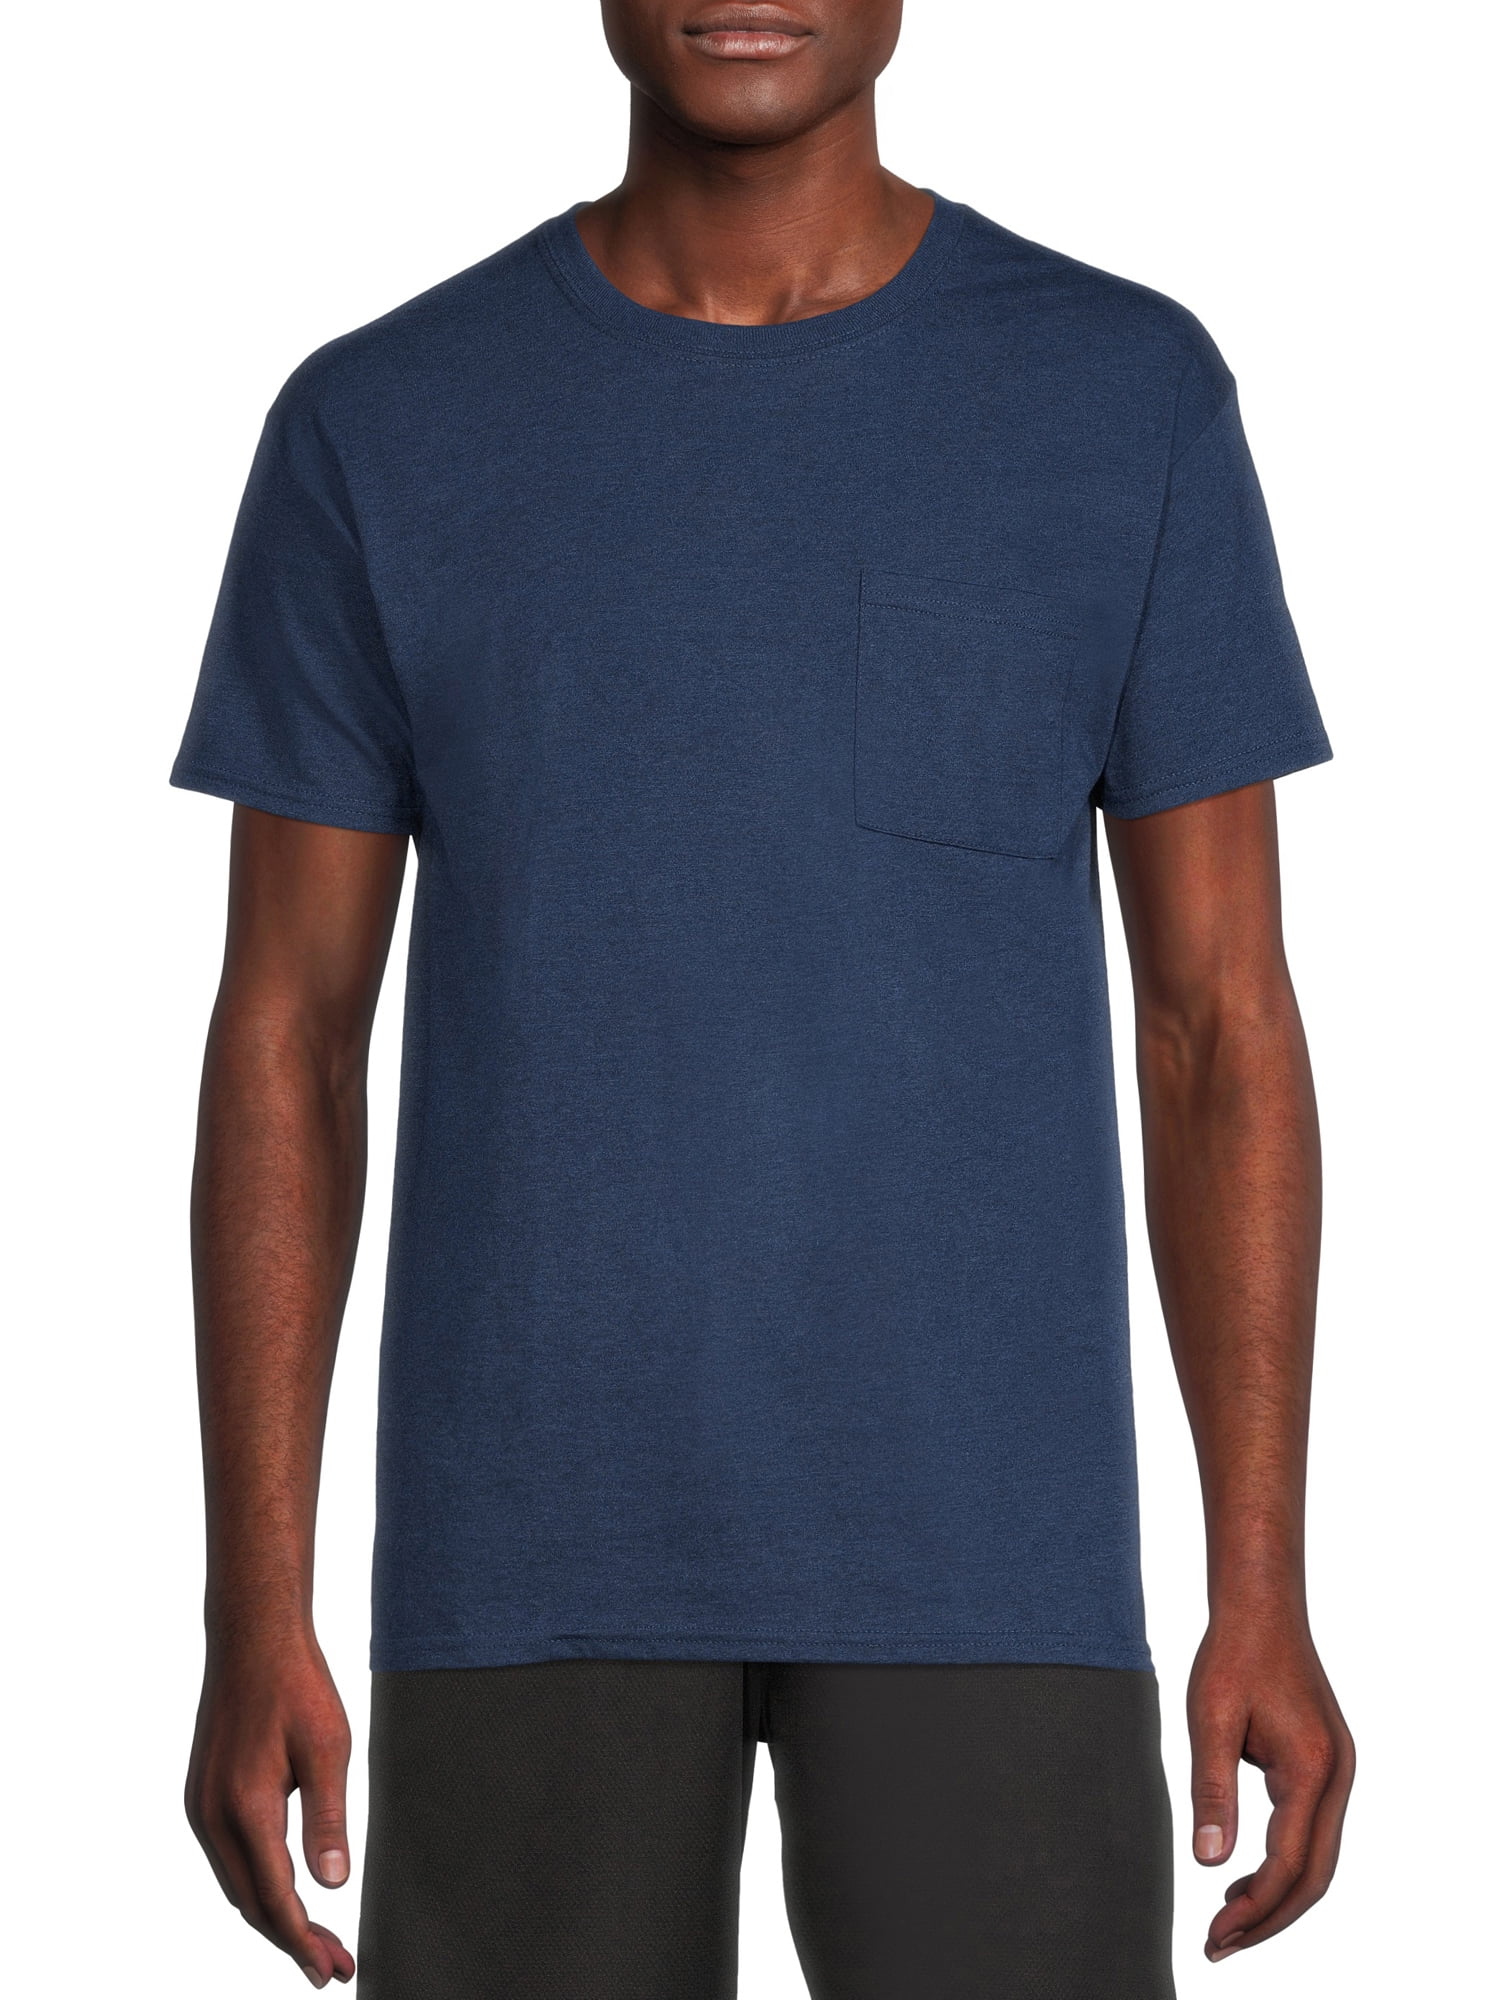 Athletic Works Men's and Big Men's Pocket T-Shirt, Sizes S-4XL